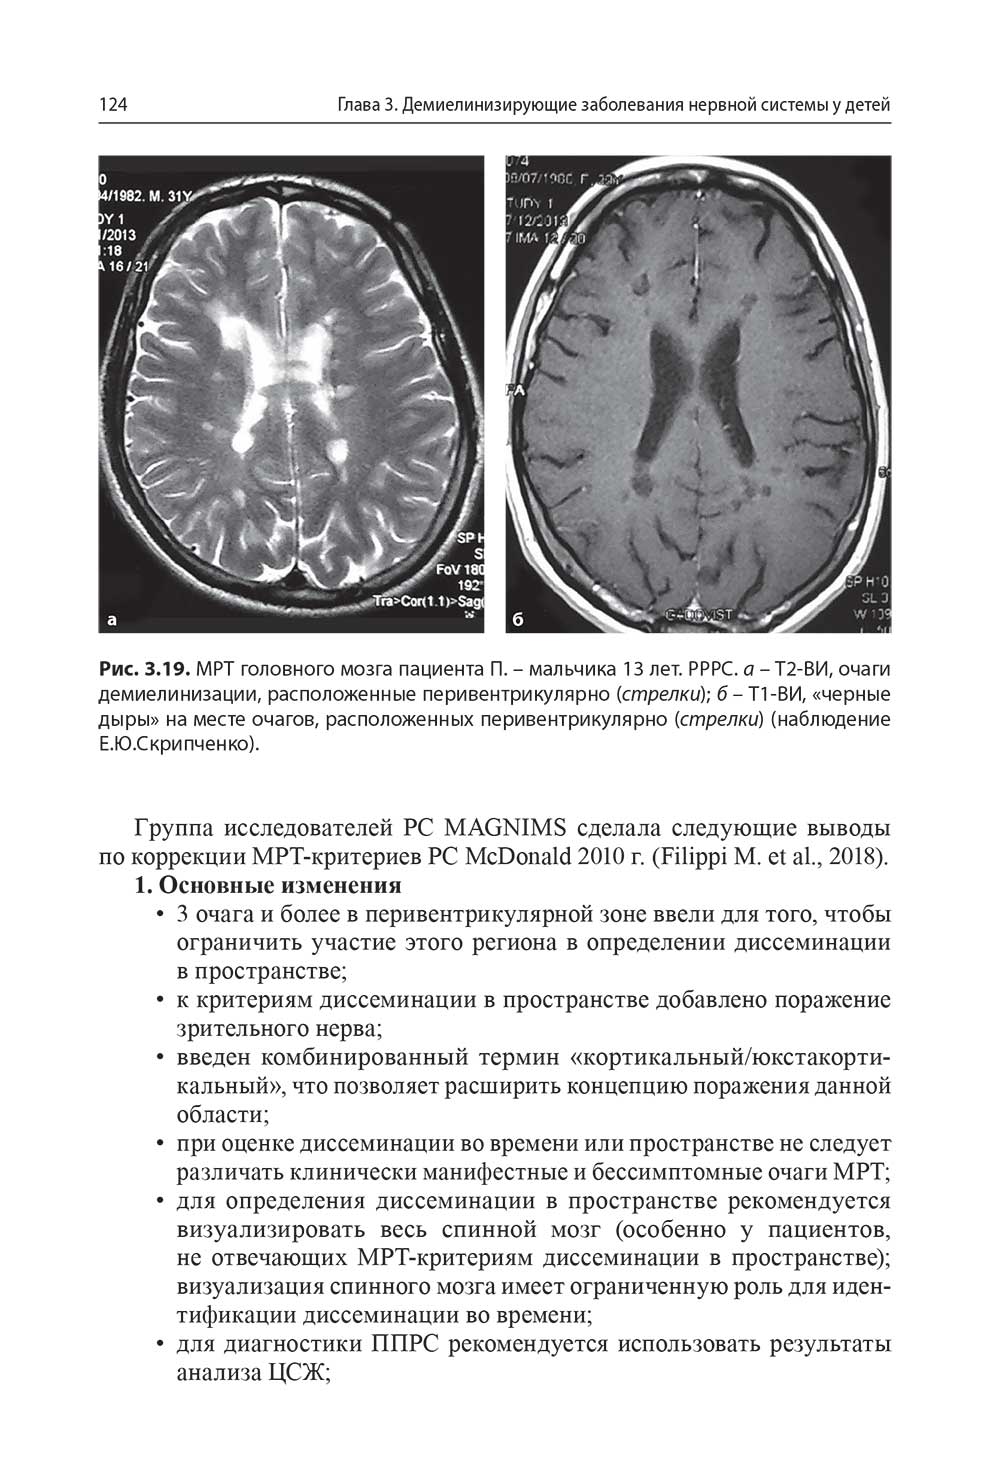 MPT головного мозга пациента П. - мальчика 13 лет. РРРС.